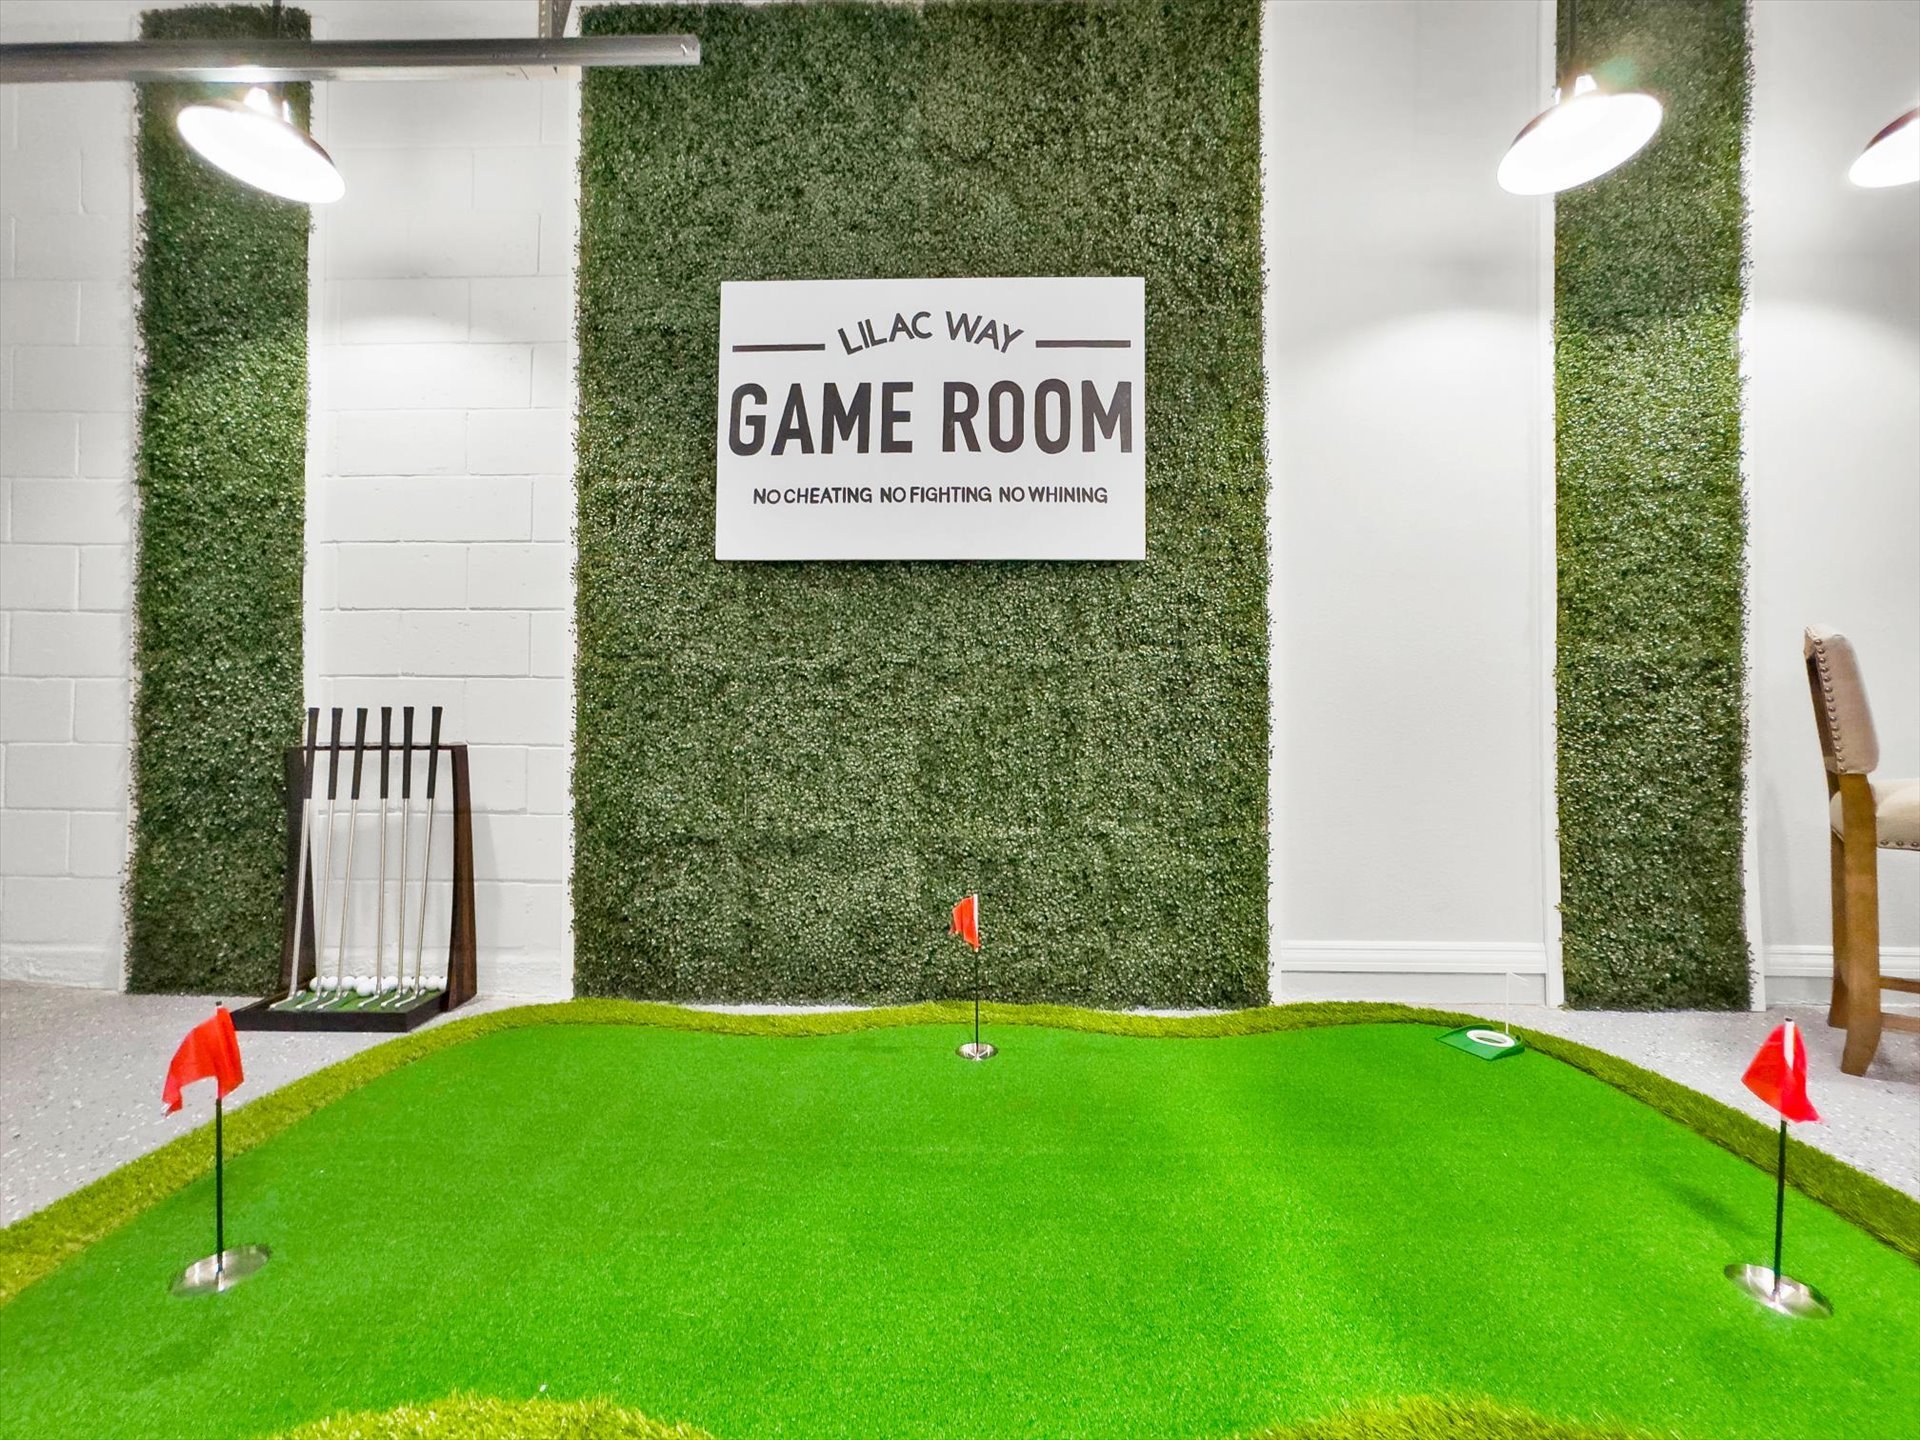 Game Room (Angle)
Putting Green